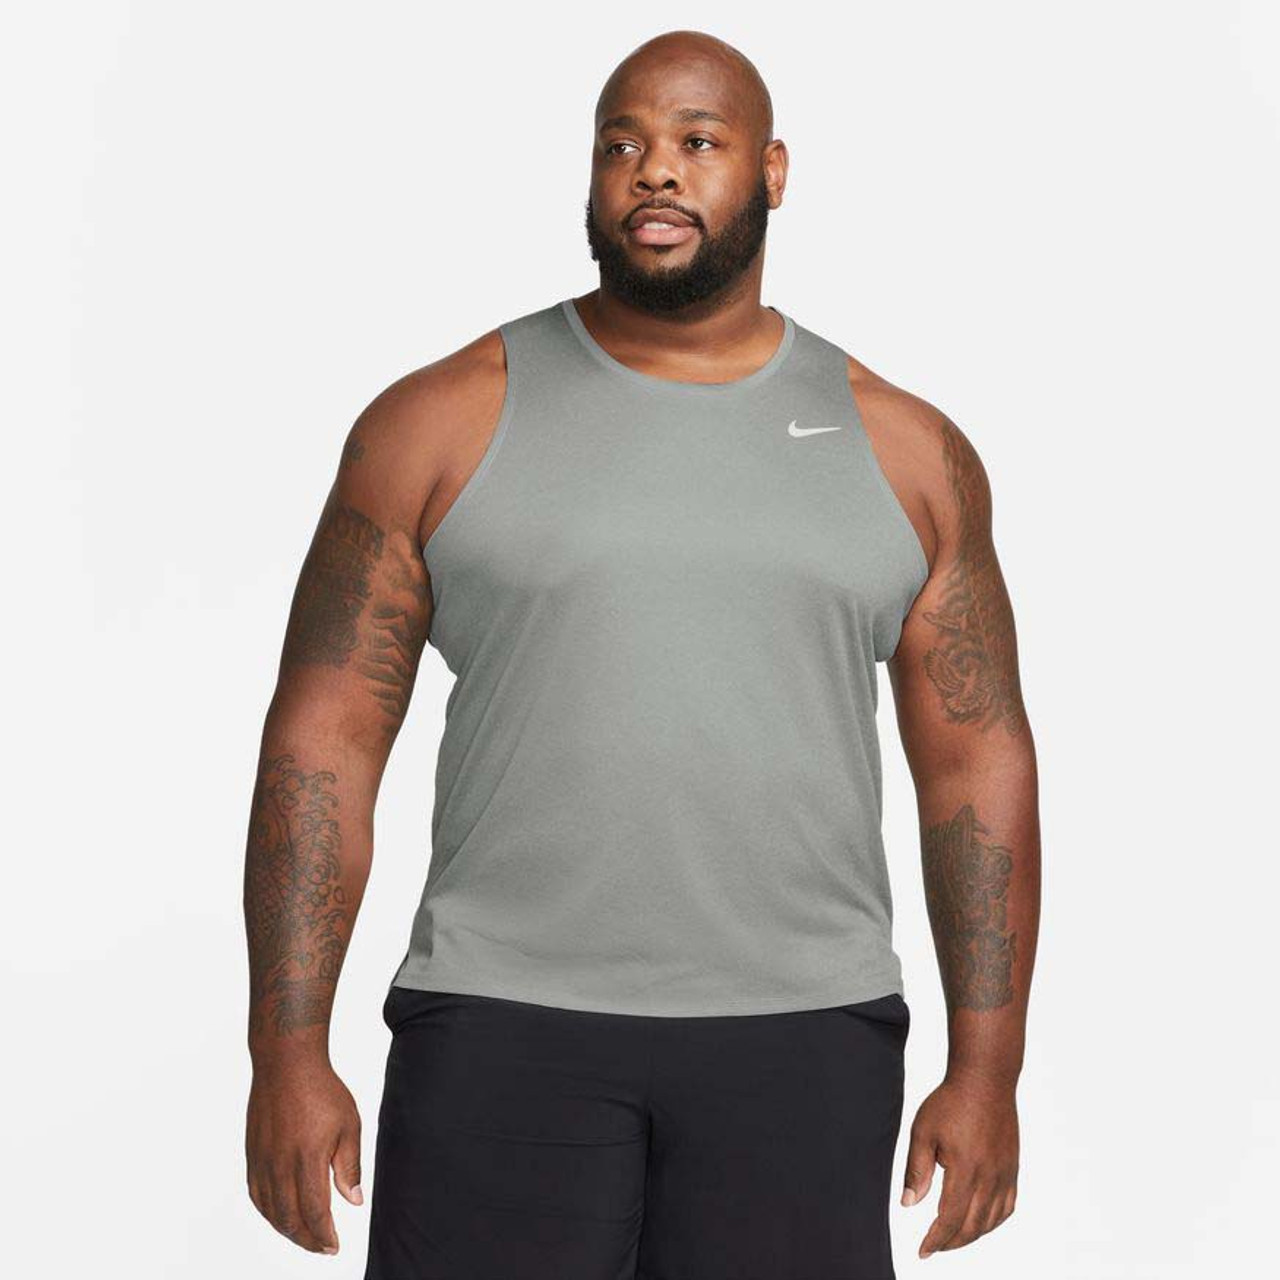 Nike Dri-FIT Tank Top Men's Sleeveless